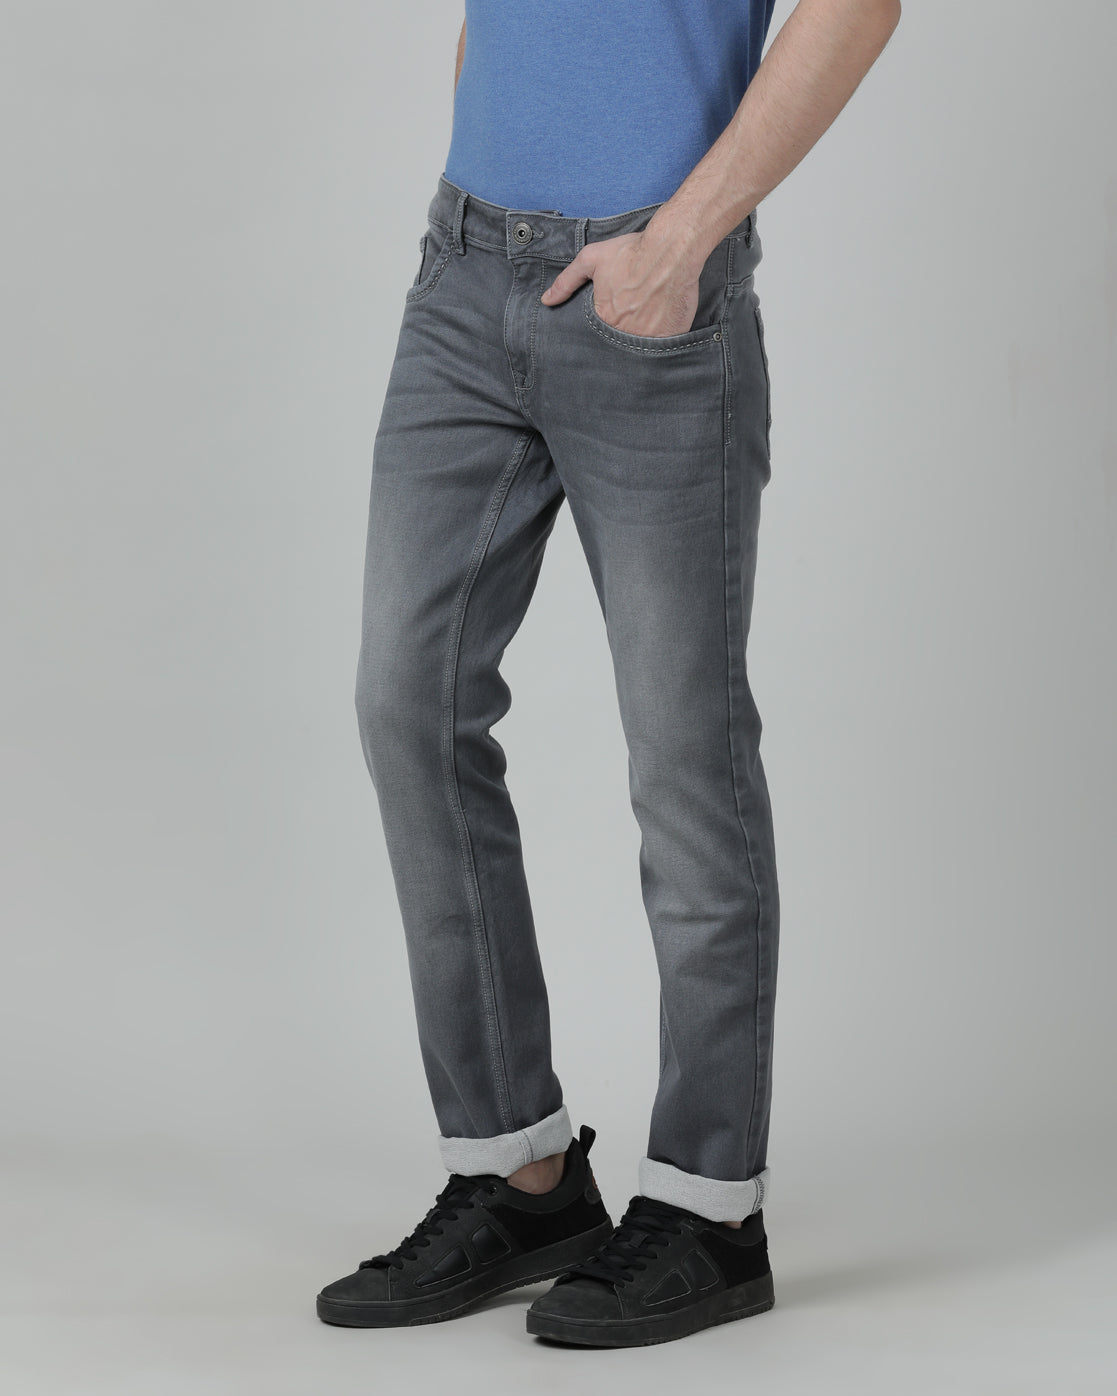 Casual Solid Grey Slim Fit Cotton Denim Jean